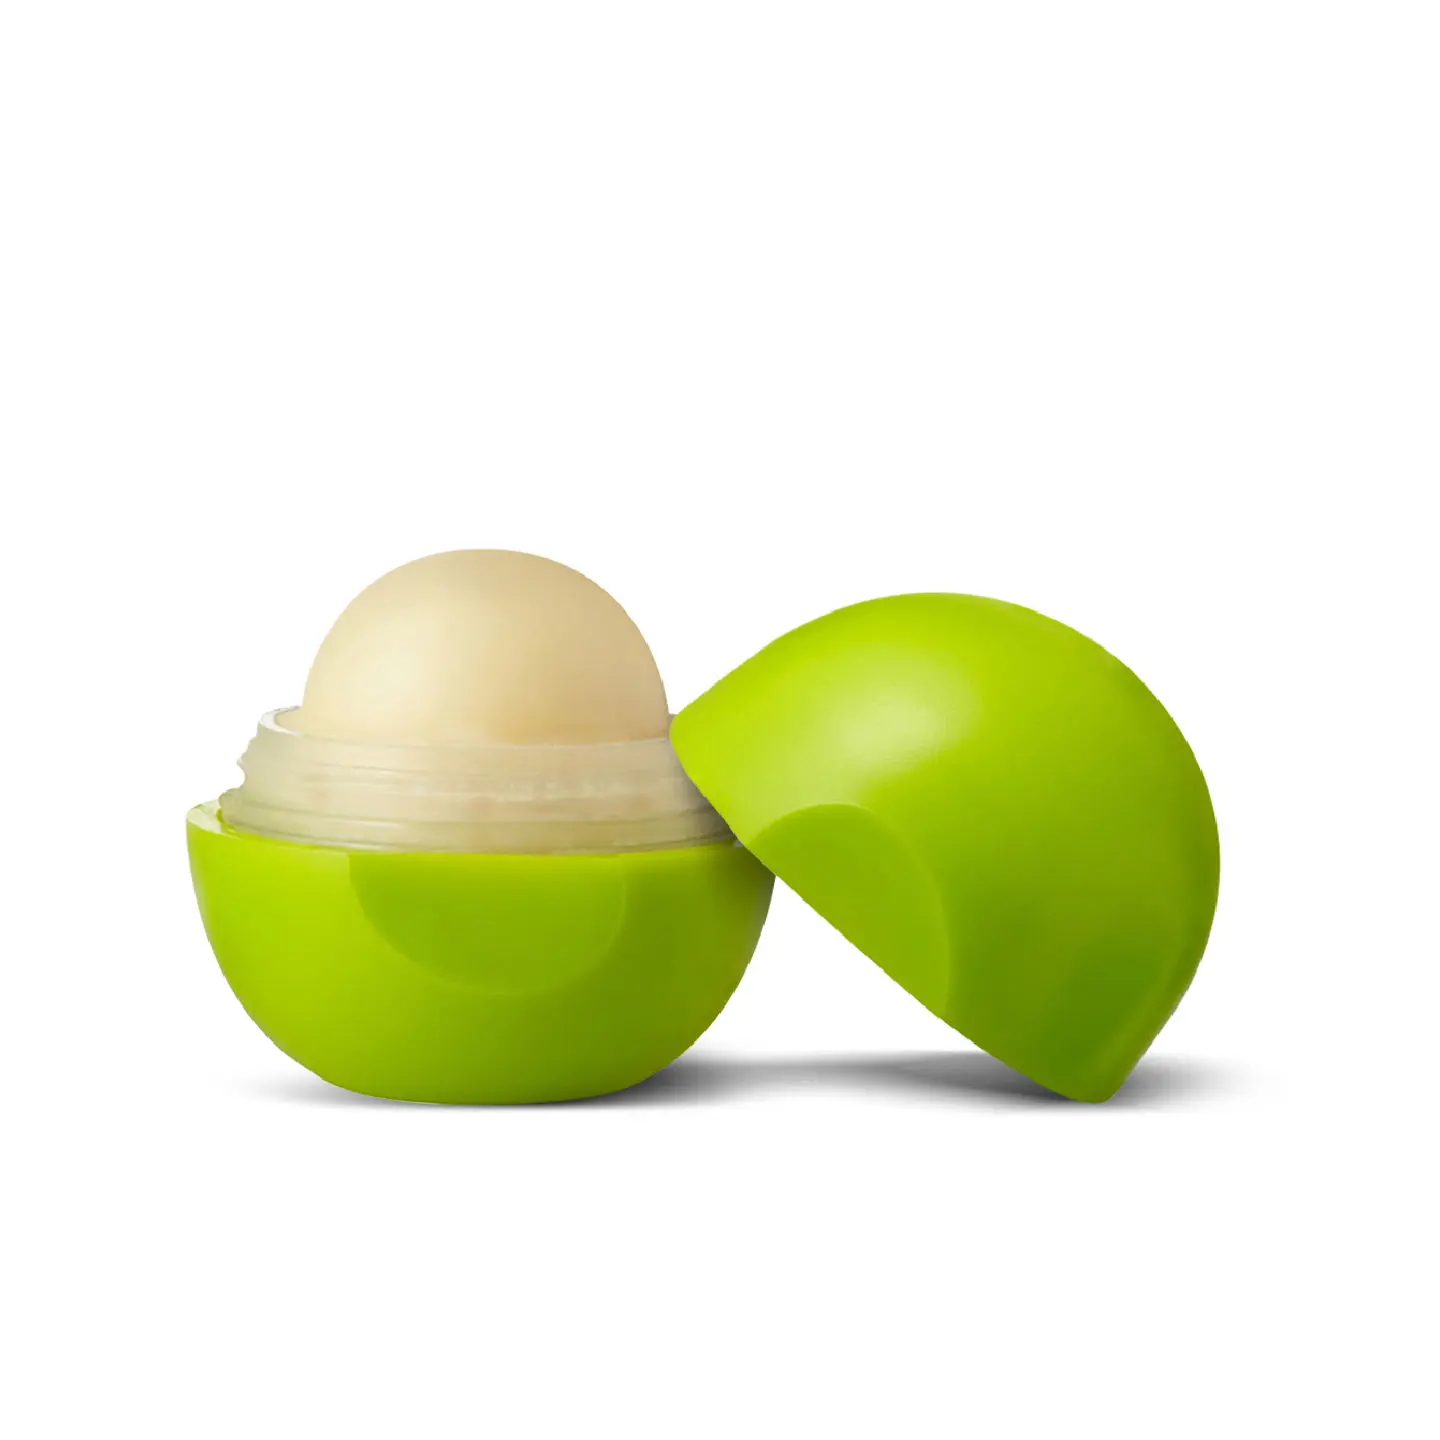 Organic Harvest Moisturizing Lip Balm: Green Apple | For Women, Men & Kids| 100% American Certified Organic | Paraben & Sulphate-free|10gm